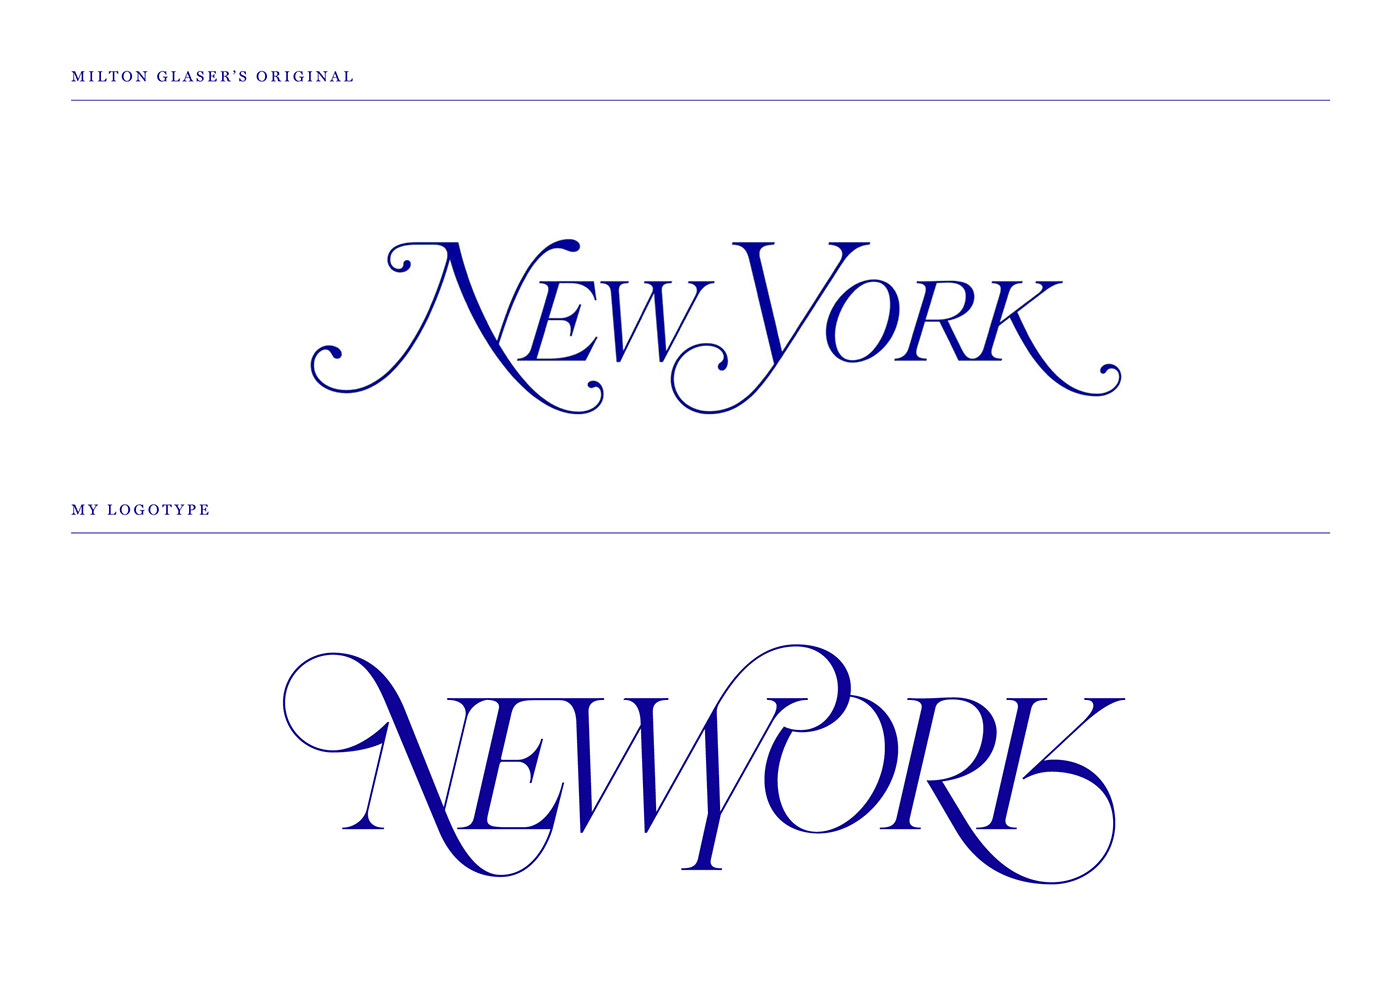 New York New York Magazine new yorker magazine identy Magazine Cover magazine logo magazine layout Magazine design Magazine Branding 